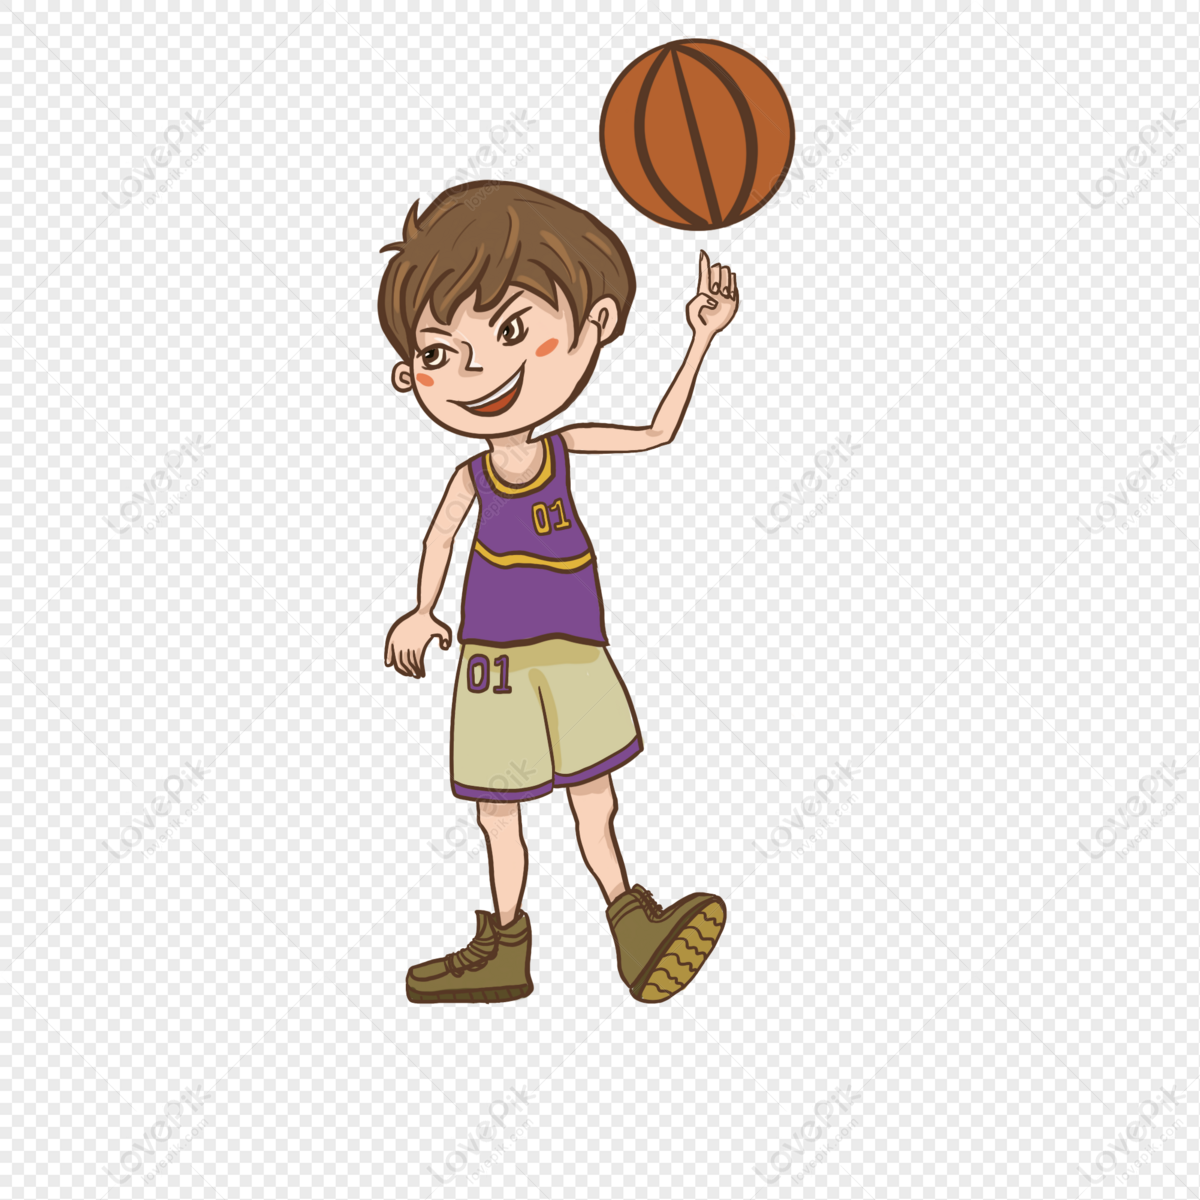 kid playing basketball clipart